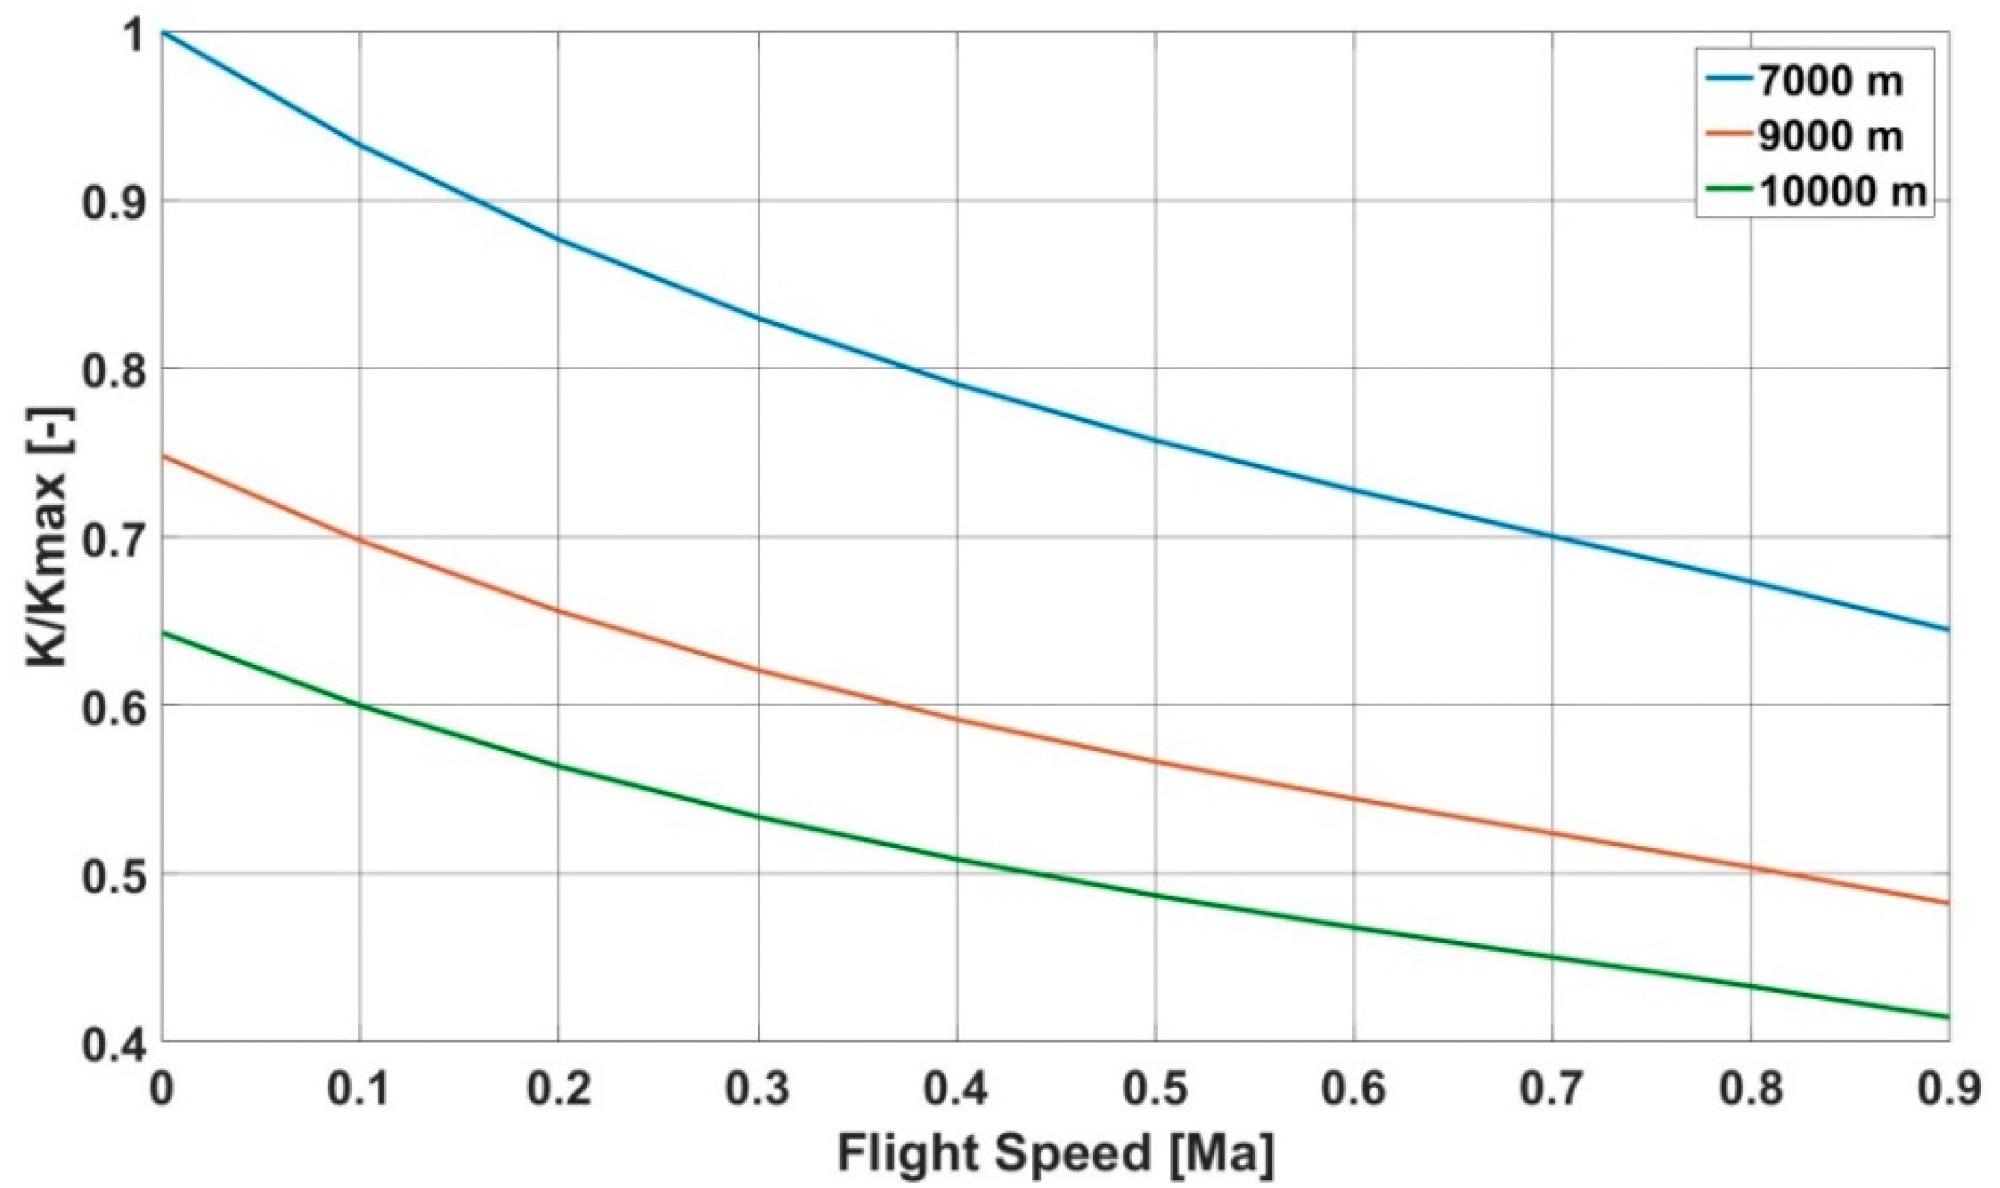 The speed-altitude characteristics of the Snecma CFM56-5C engine.